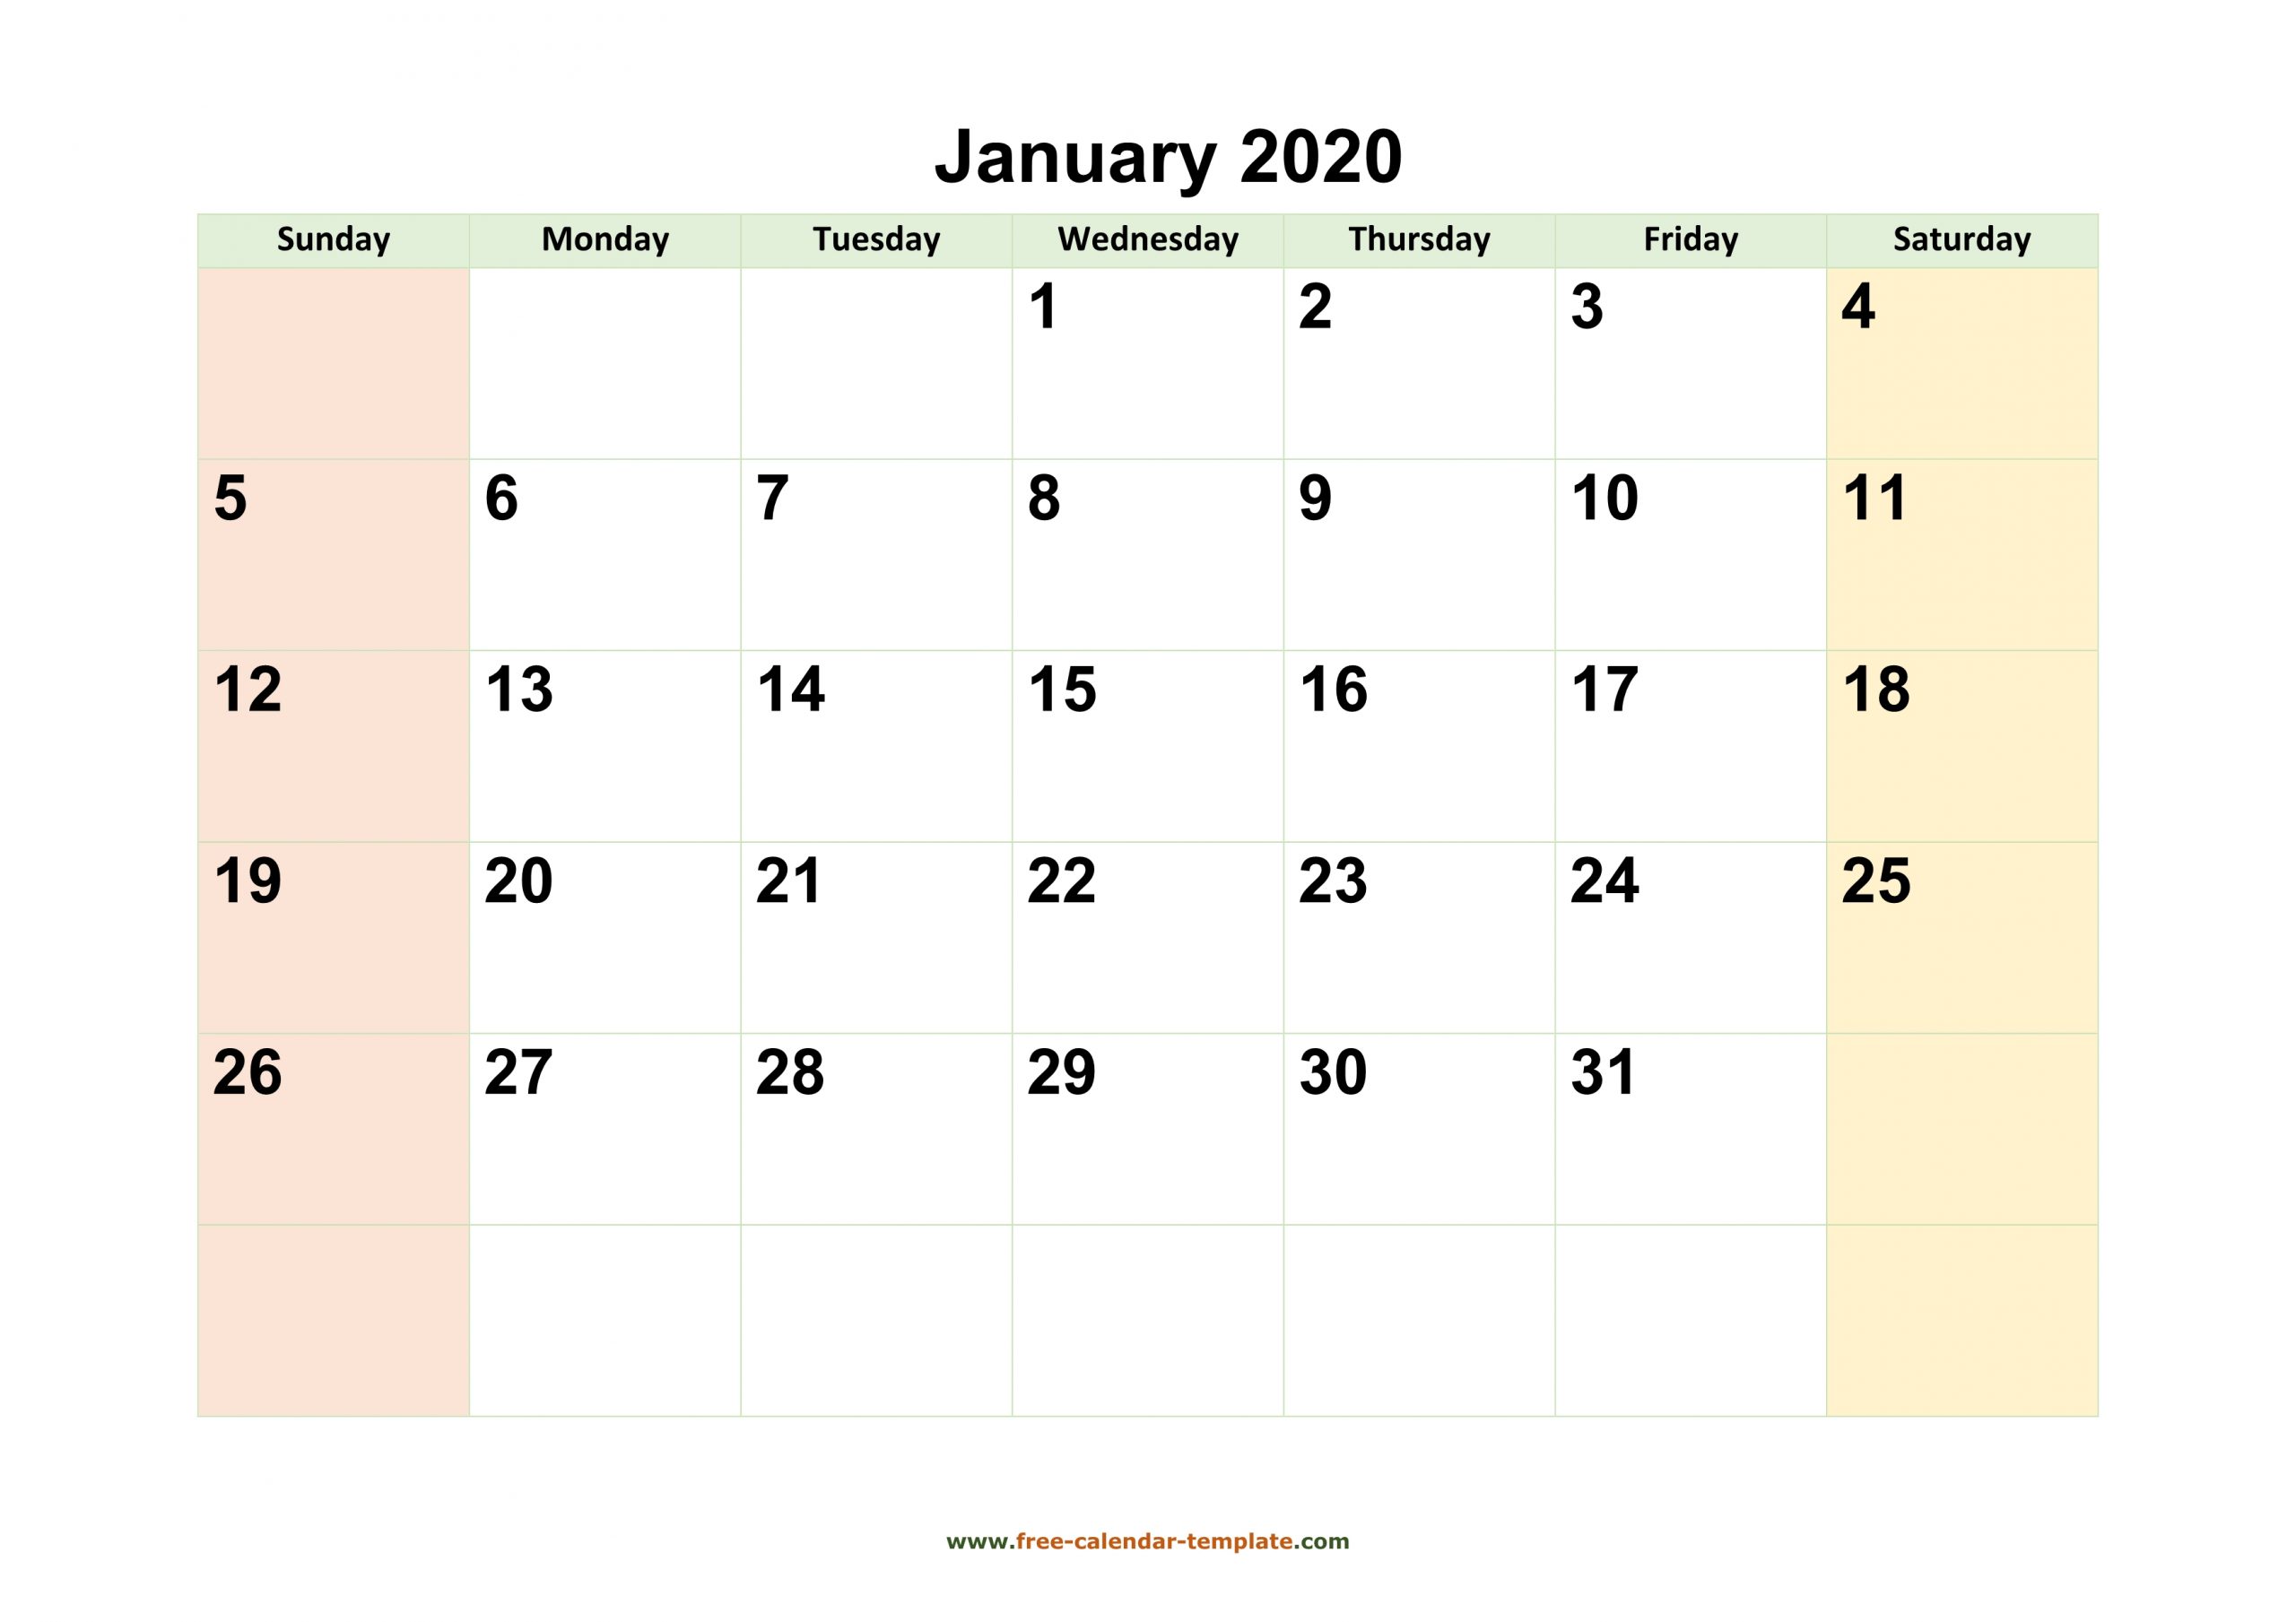 January 2020 Free Calendar Tempplate | Free-Calendar